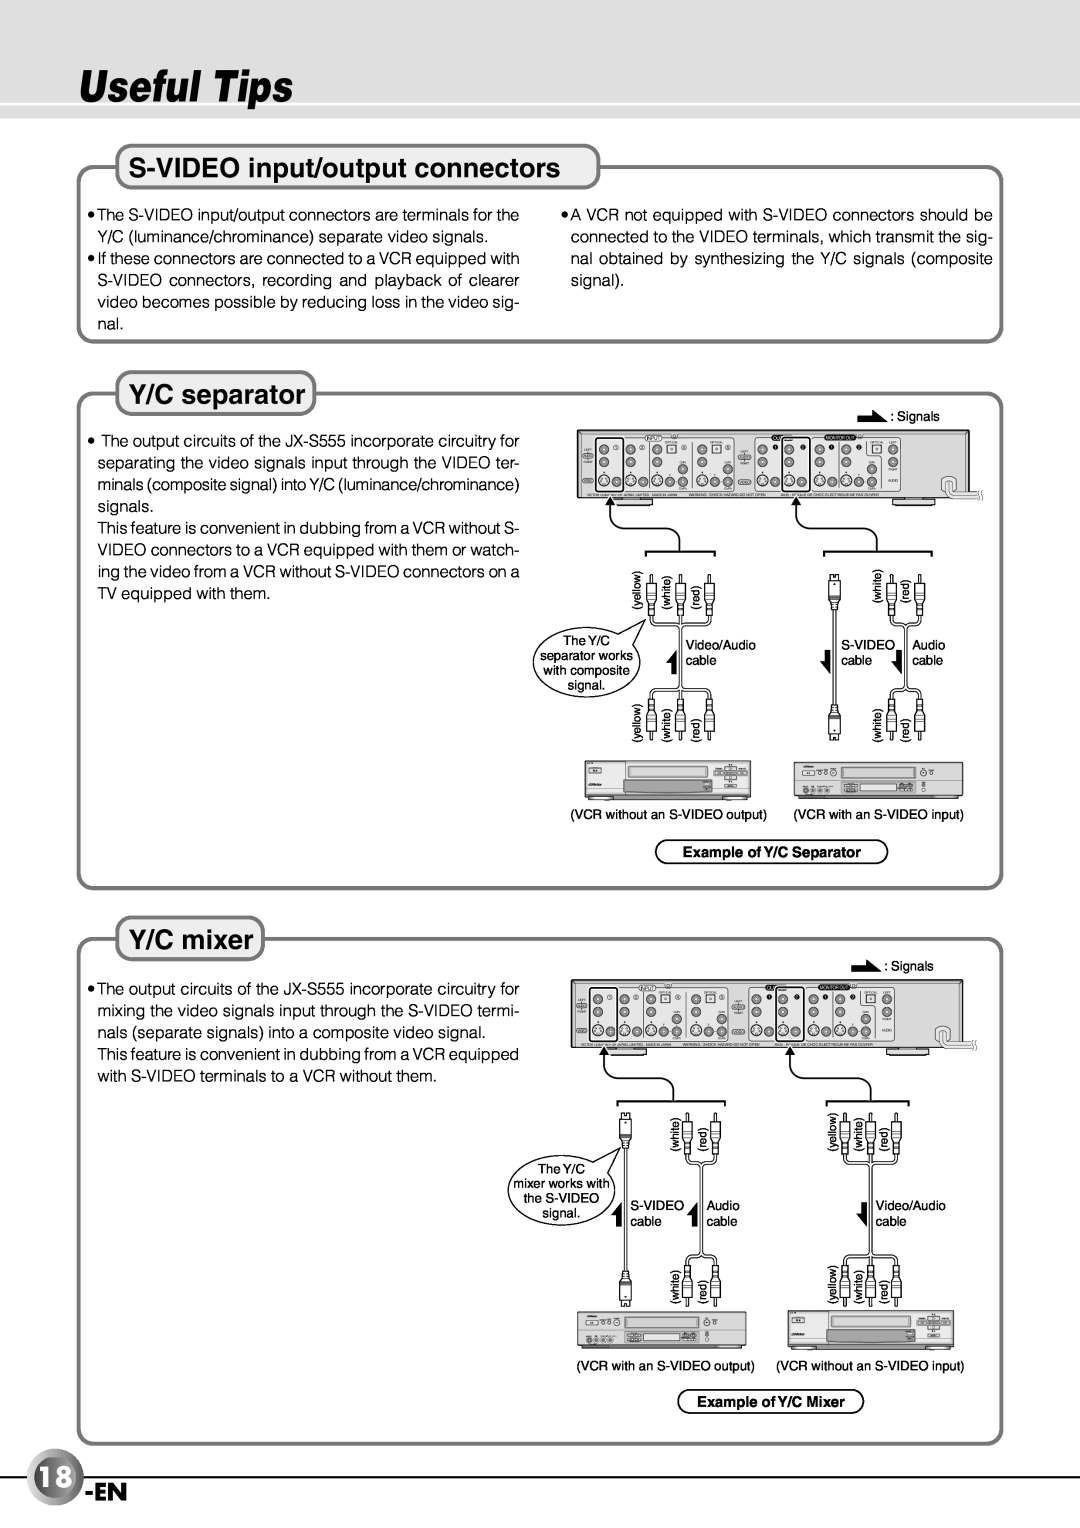 JVC JX-B555 manual Useful Tips, S-VIDEOinput/output connectors, Y/C separator, Y/C mixer, 18-EN 